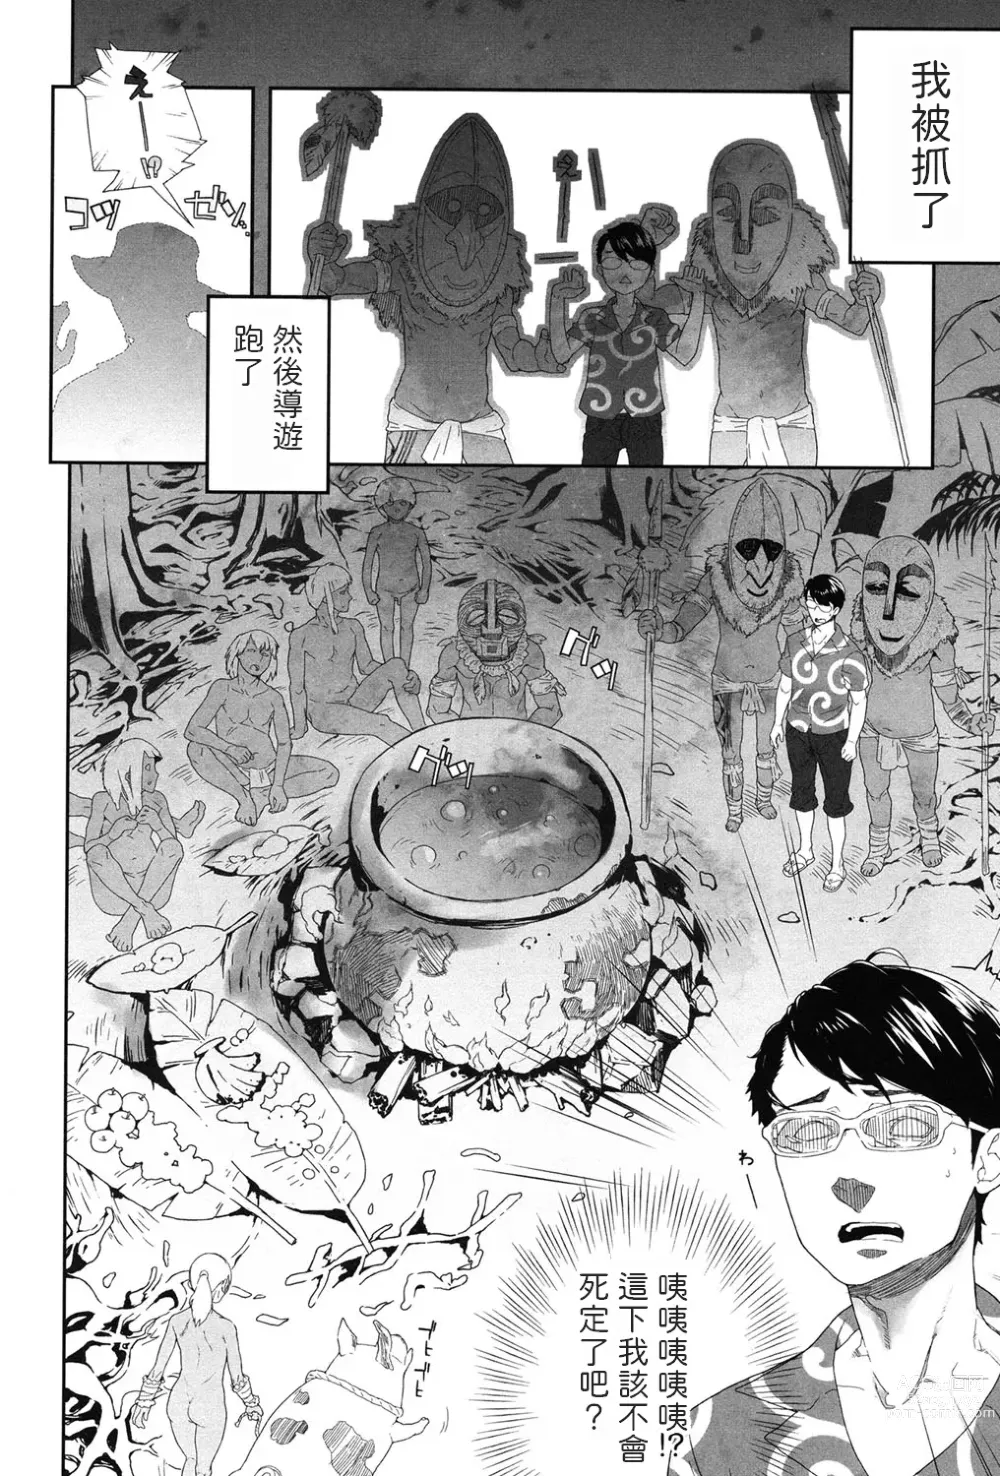 Page 4 of manga Tasatsu Tour